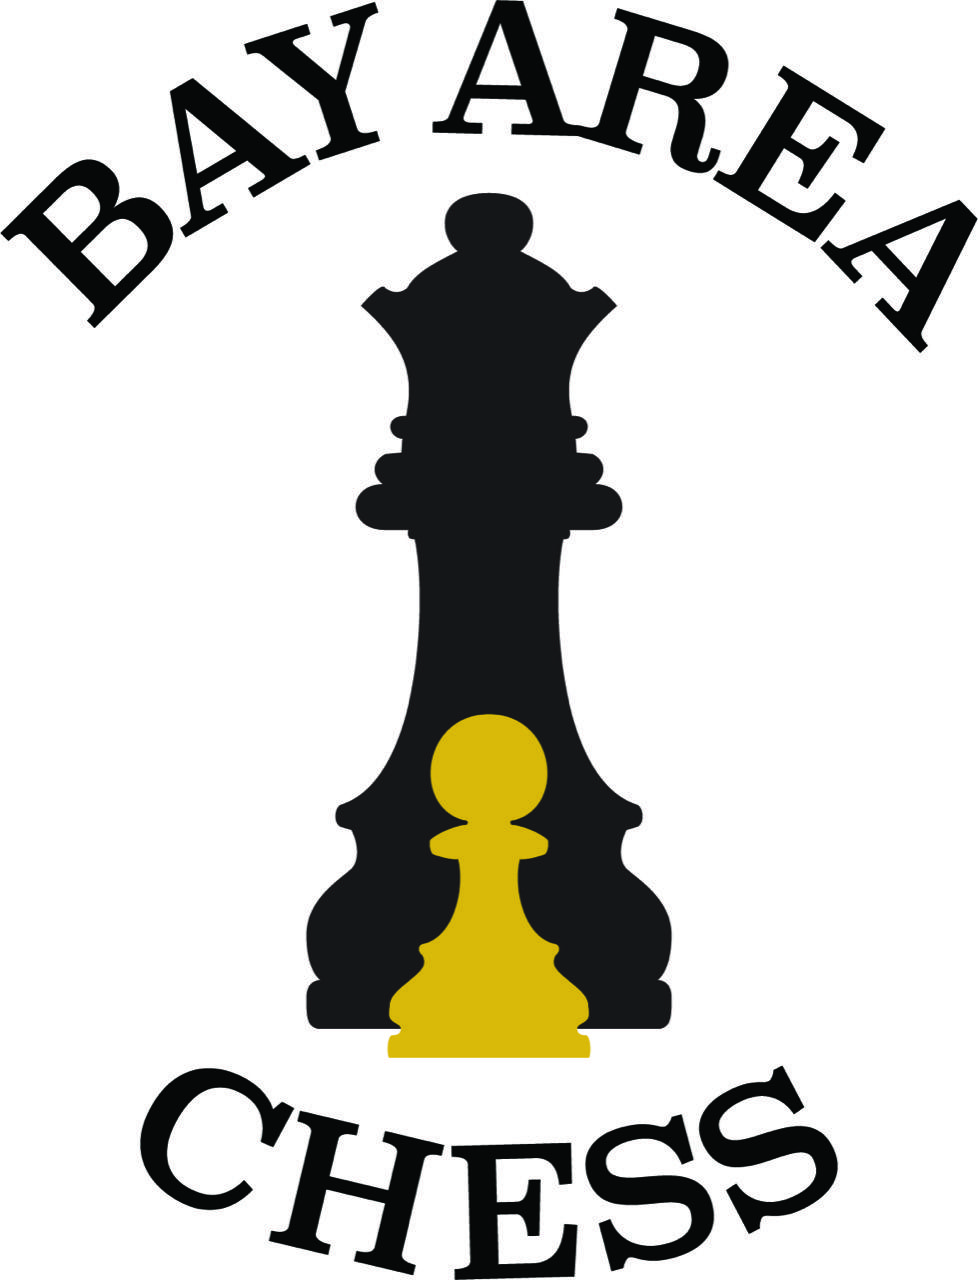 Bay Area Chess, Inc.